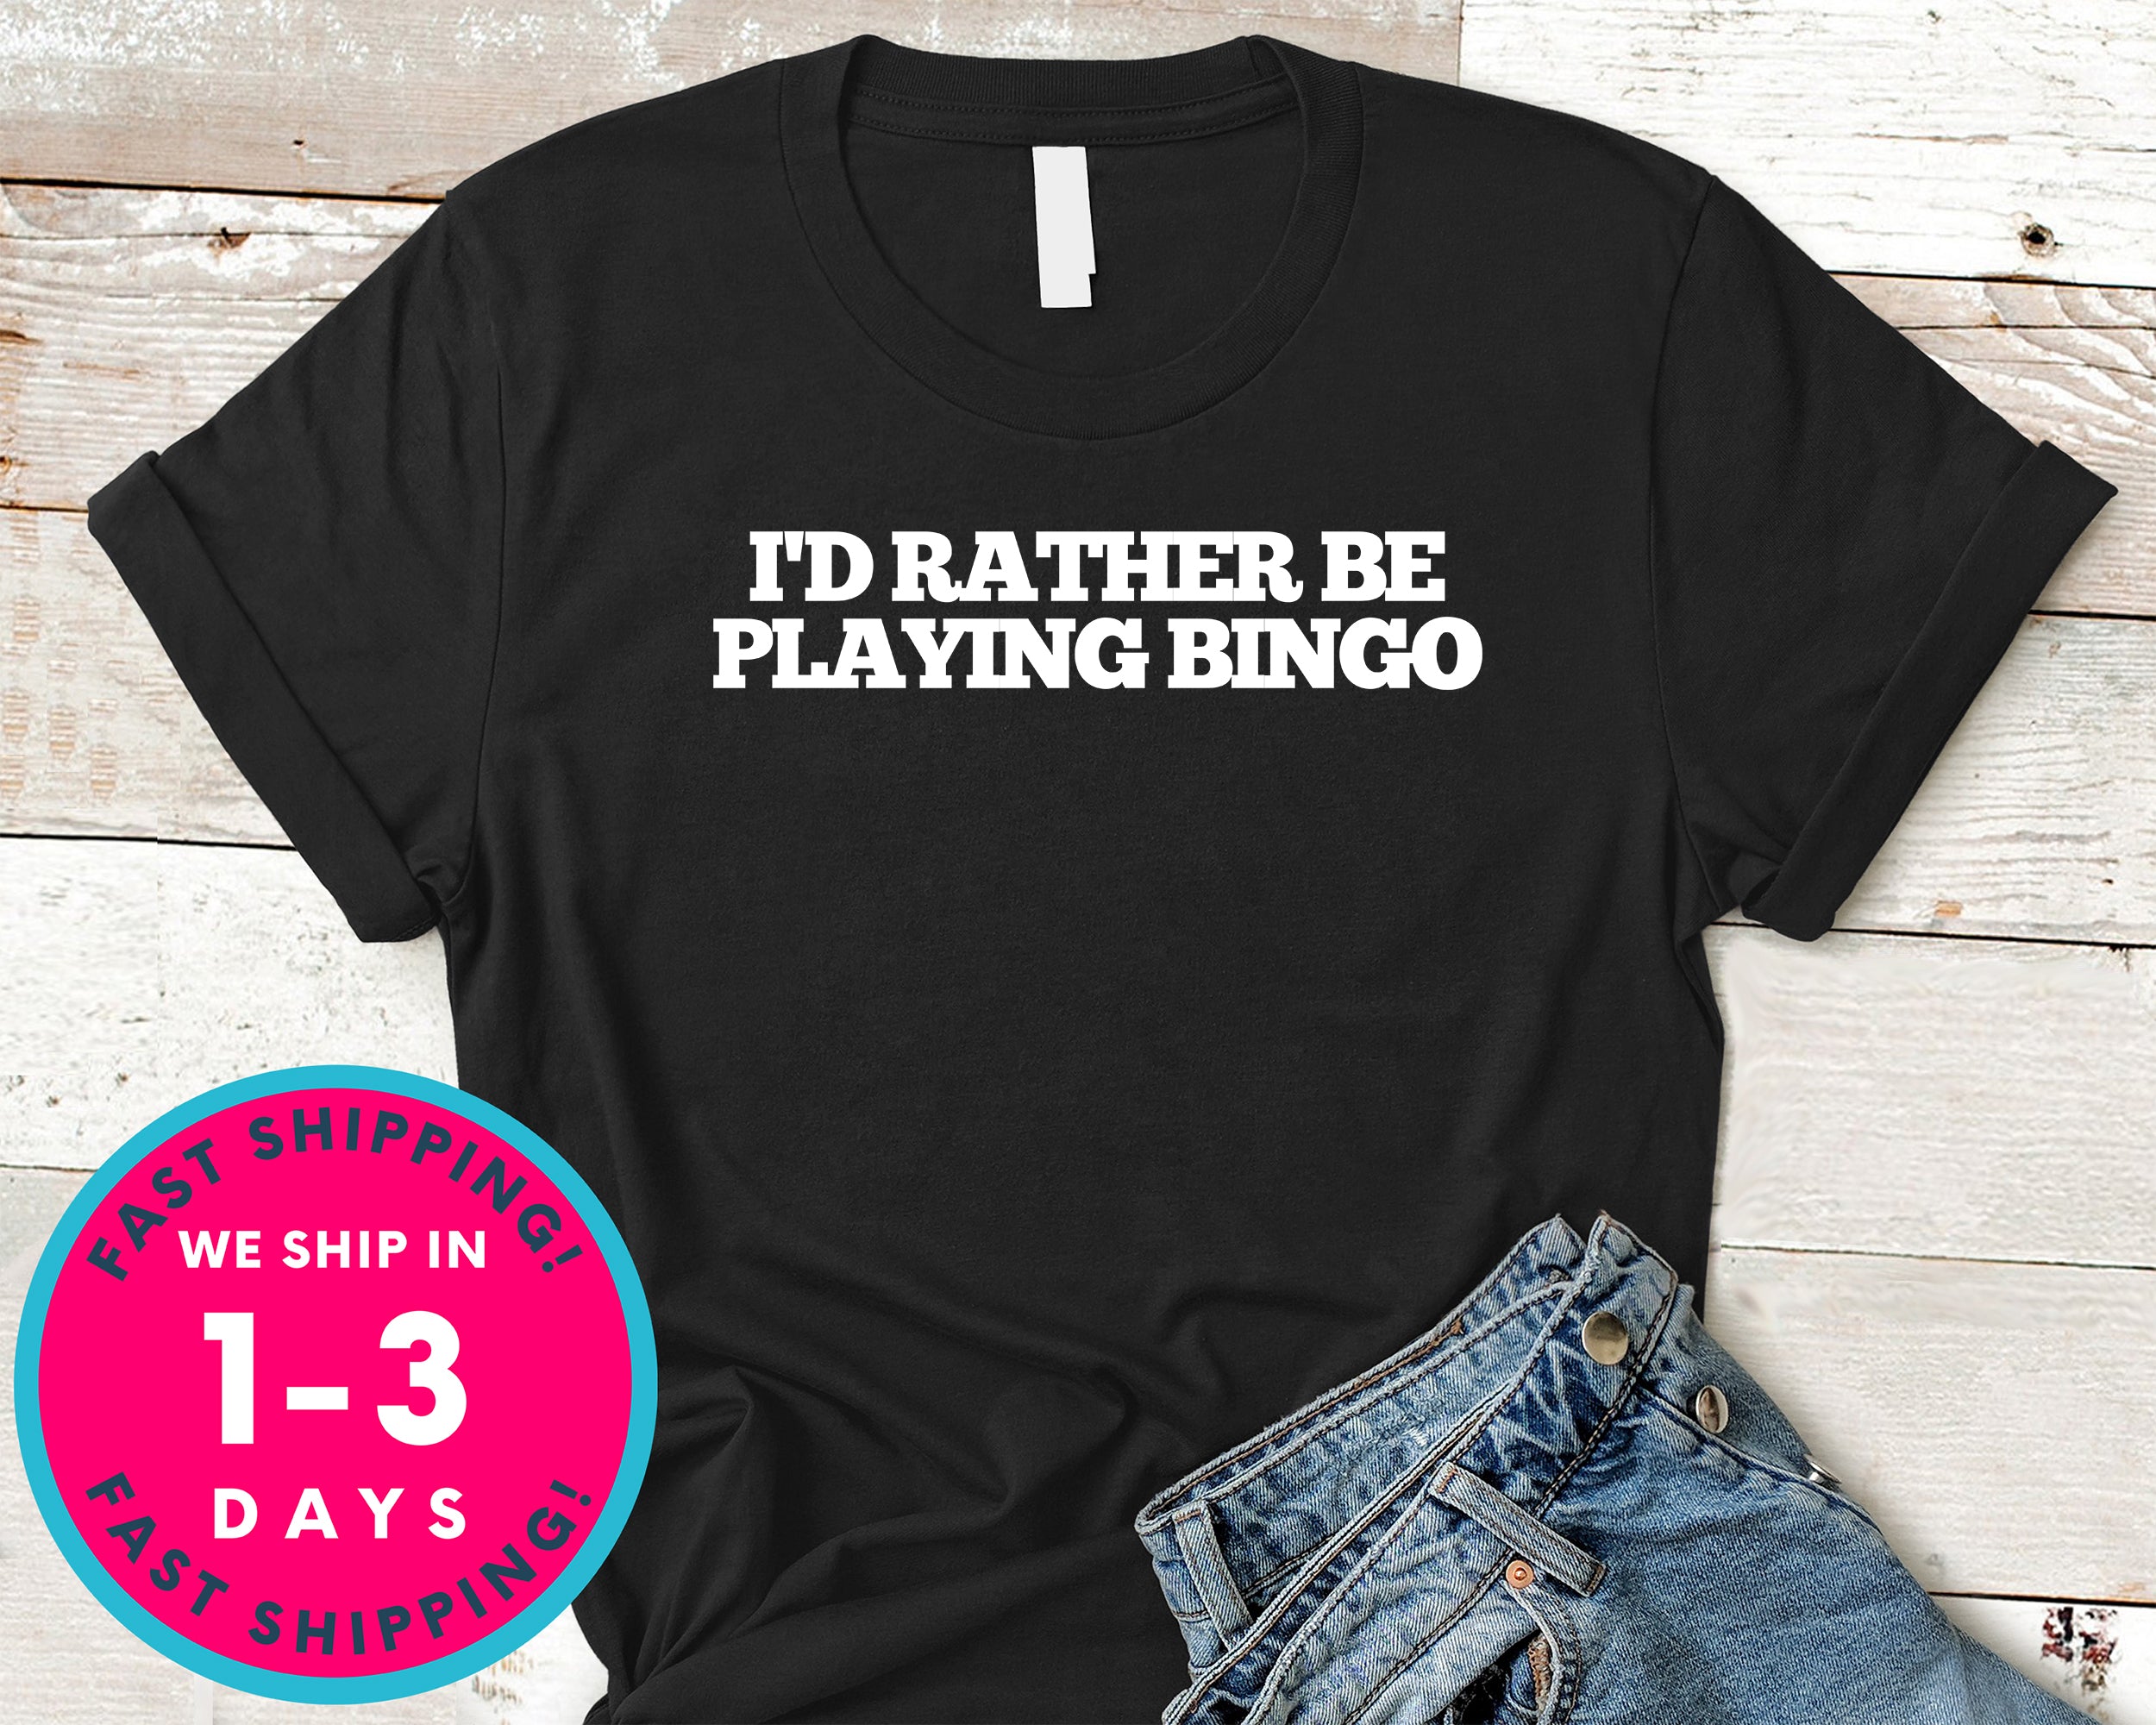 I Rather Be Playing Bingo T-Shirt - Funny Humor Shirt